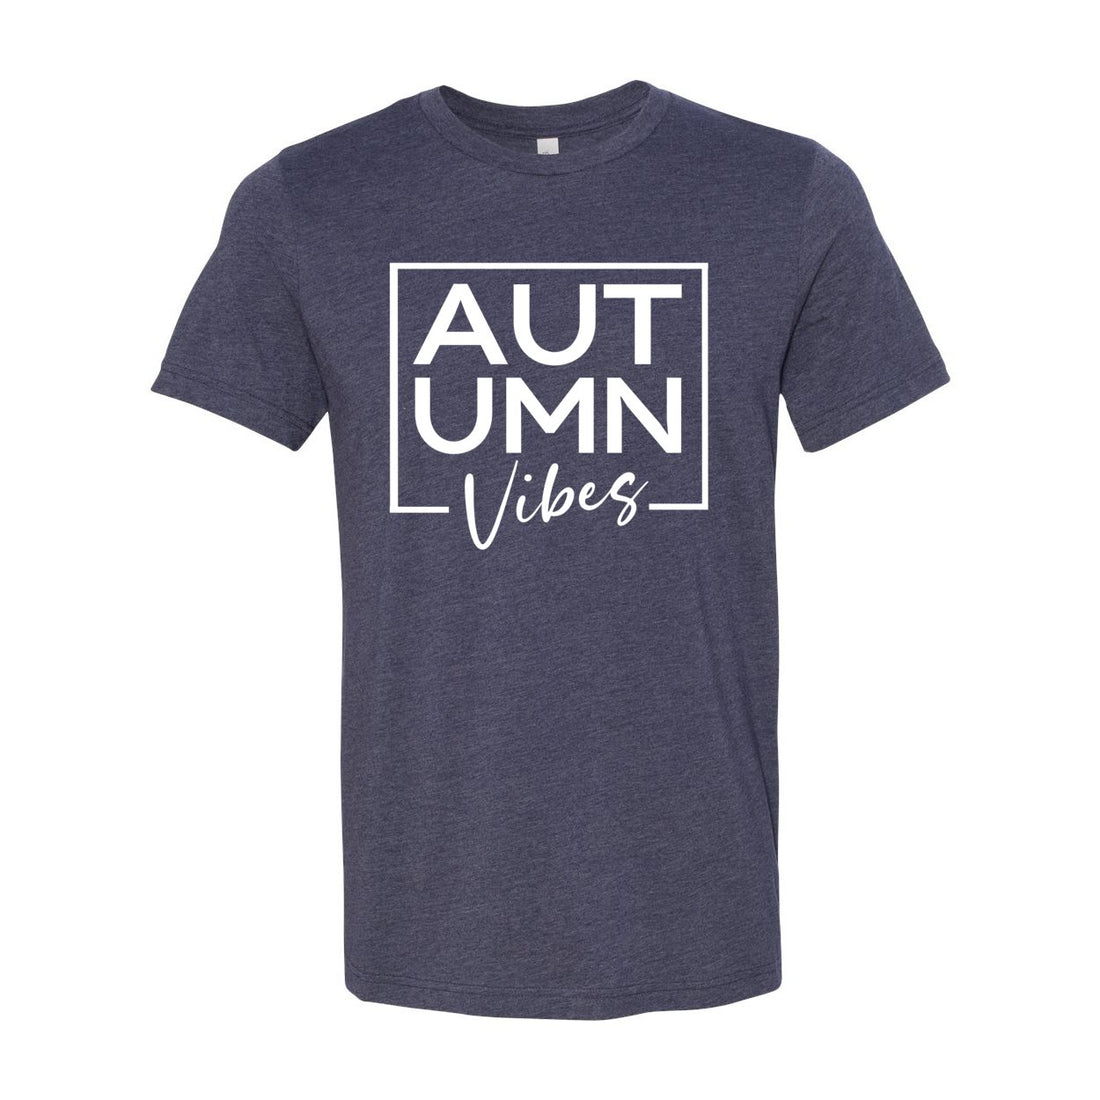 Autumn Vibes - T-Shirts - Positively Sassy - Autumn Vibes